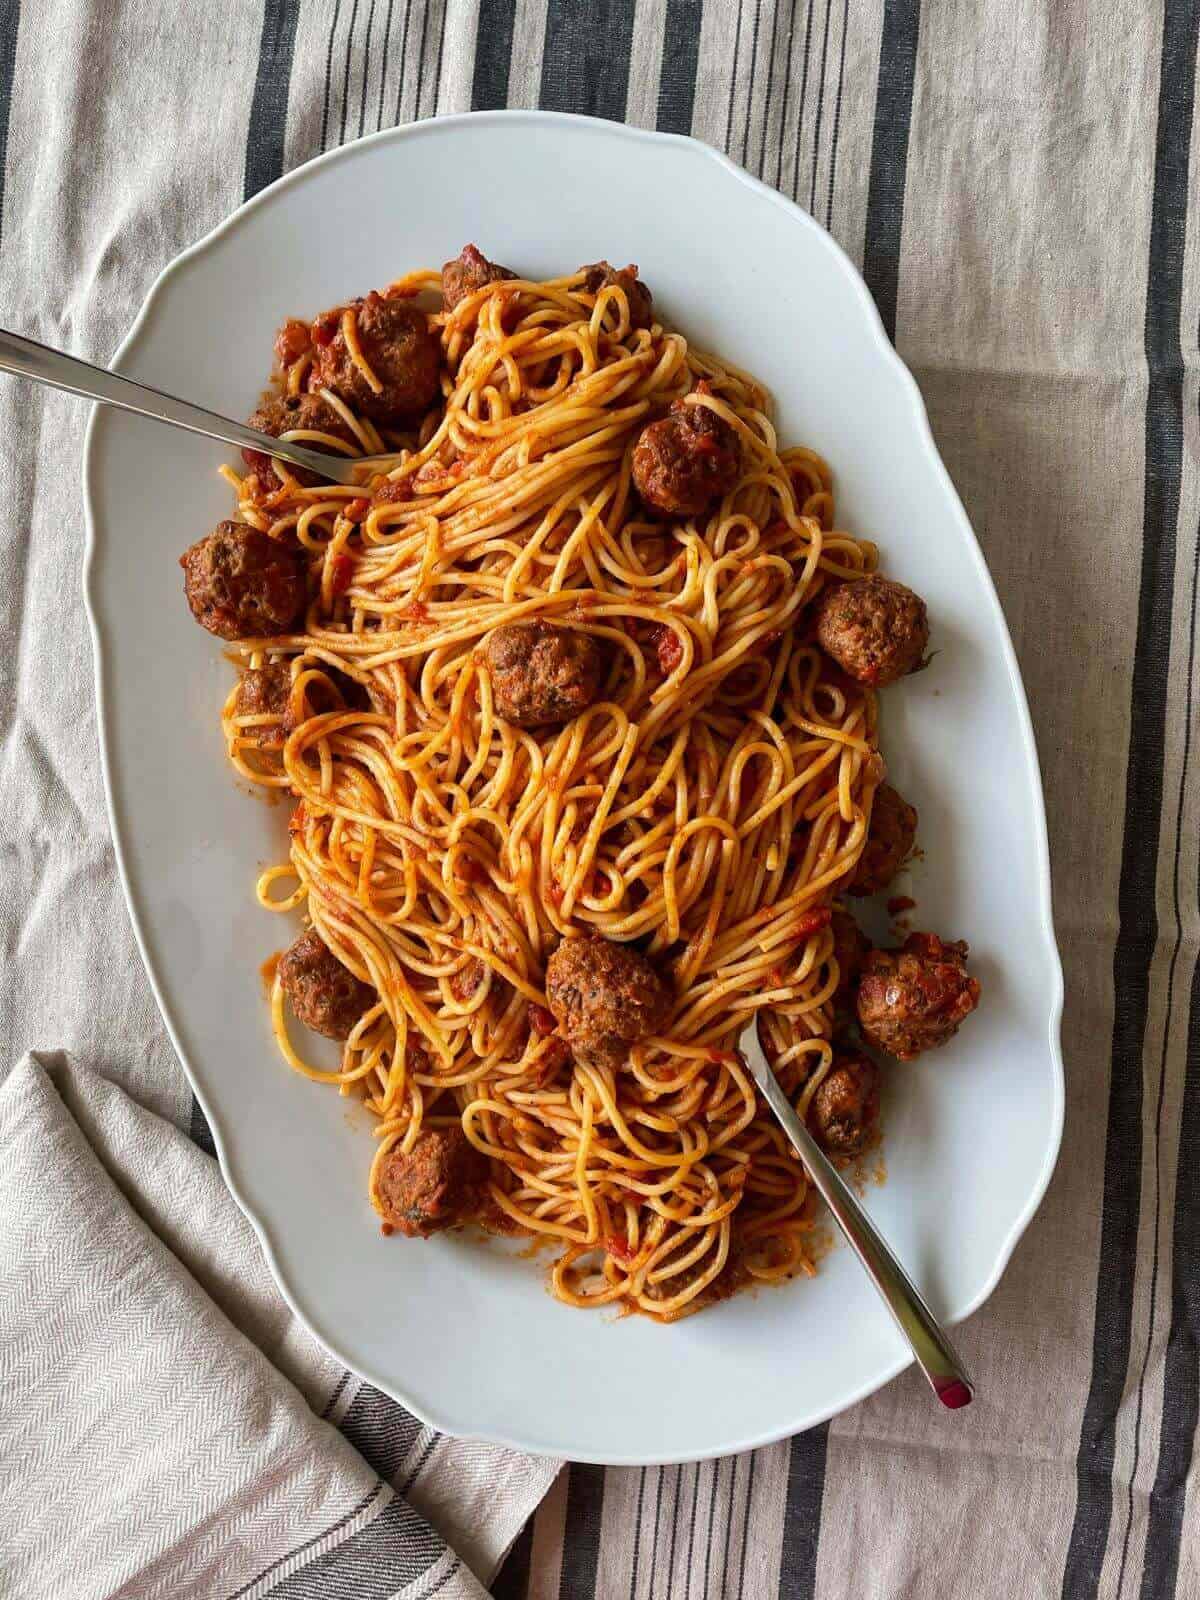 Spaghetti and Meatballs in fresh marinara served